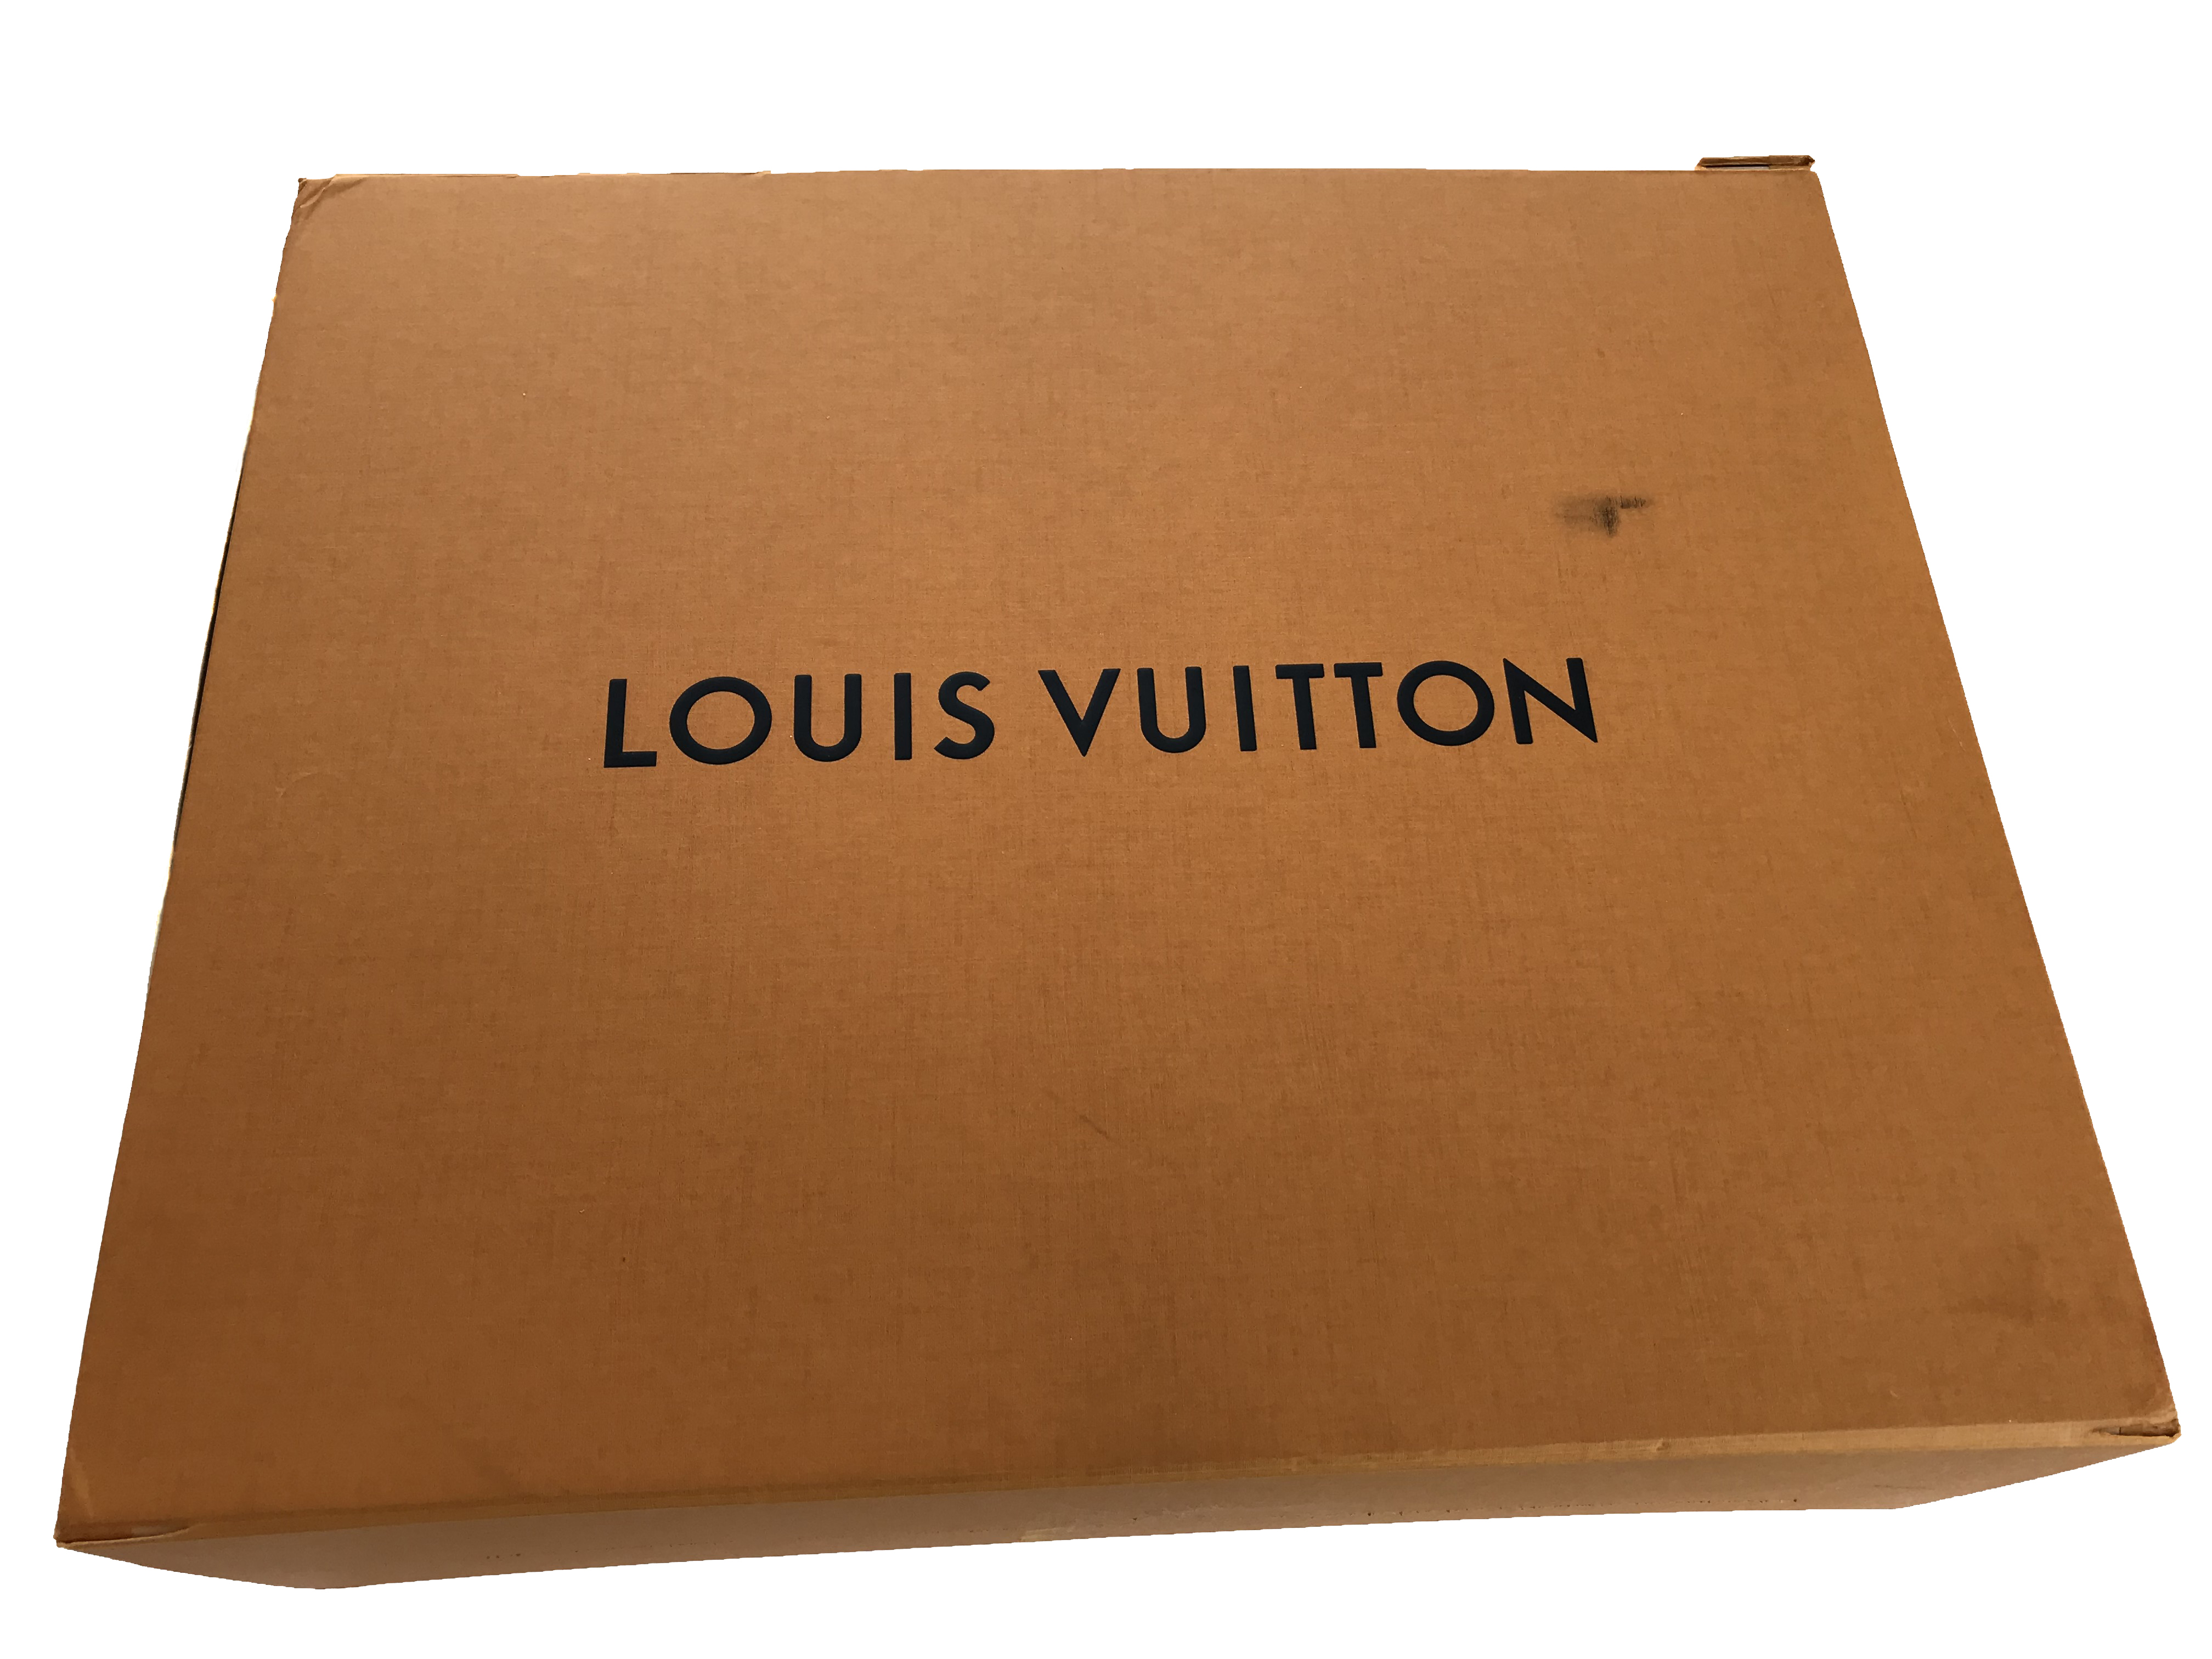 Louis Vuitton Upside Down Apollo Backpack - Limited Edition Kim Jones M43676